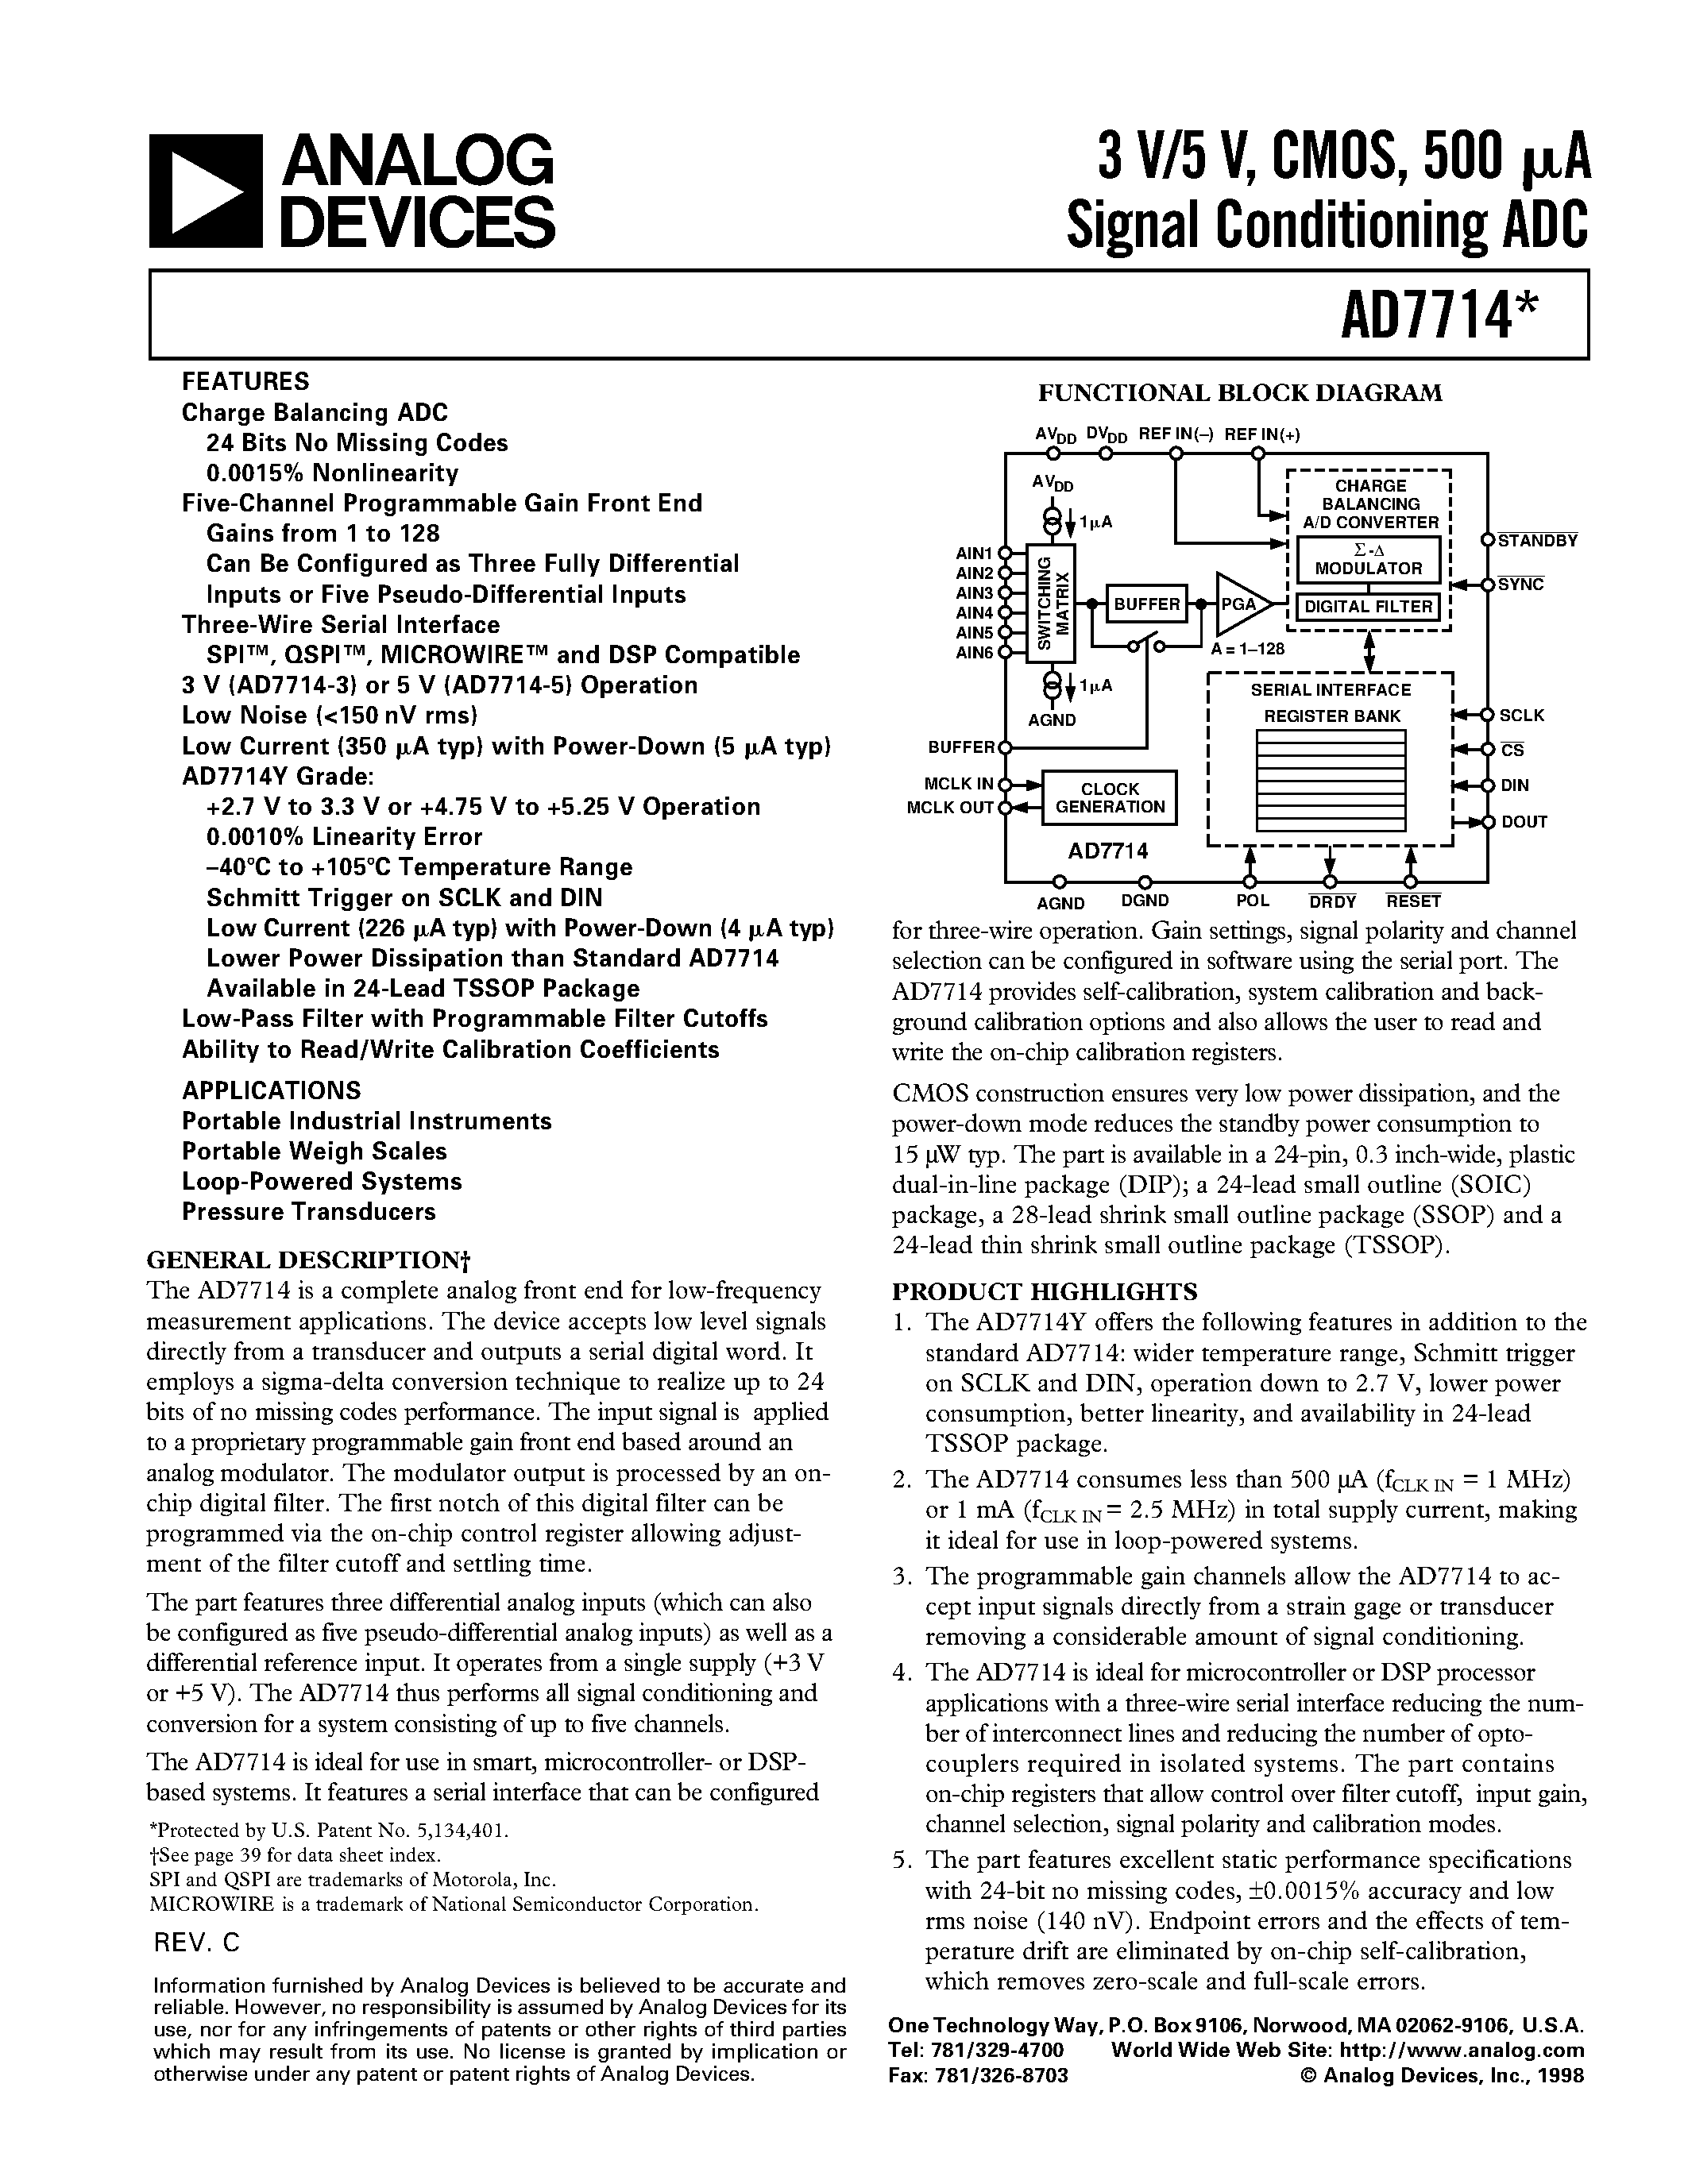 Datasheet AD7714AR-5 - 3 V/5 V/ CMOS/ 500 uA Signal Conditioning ADC page 1